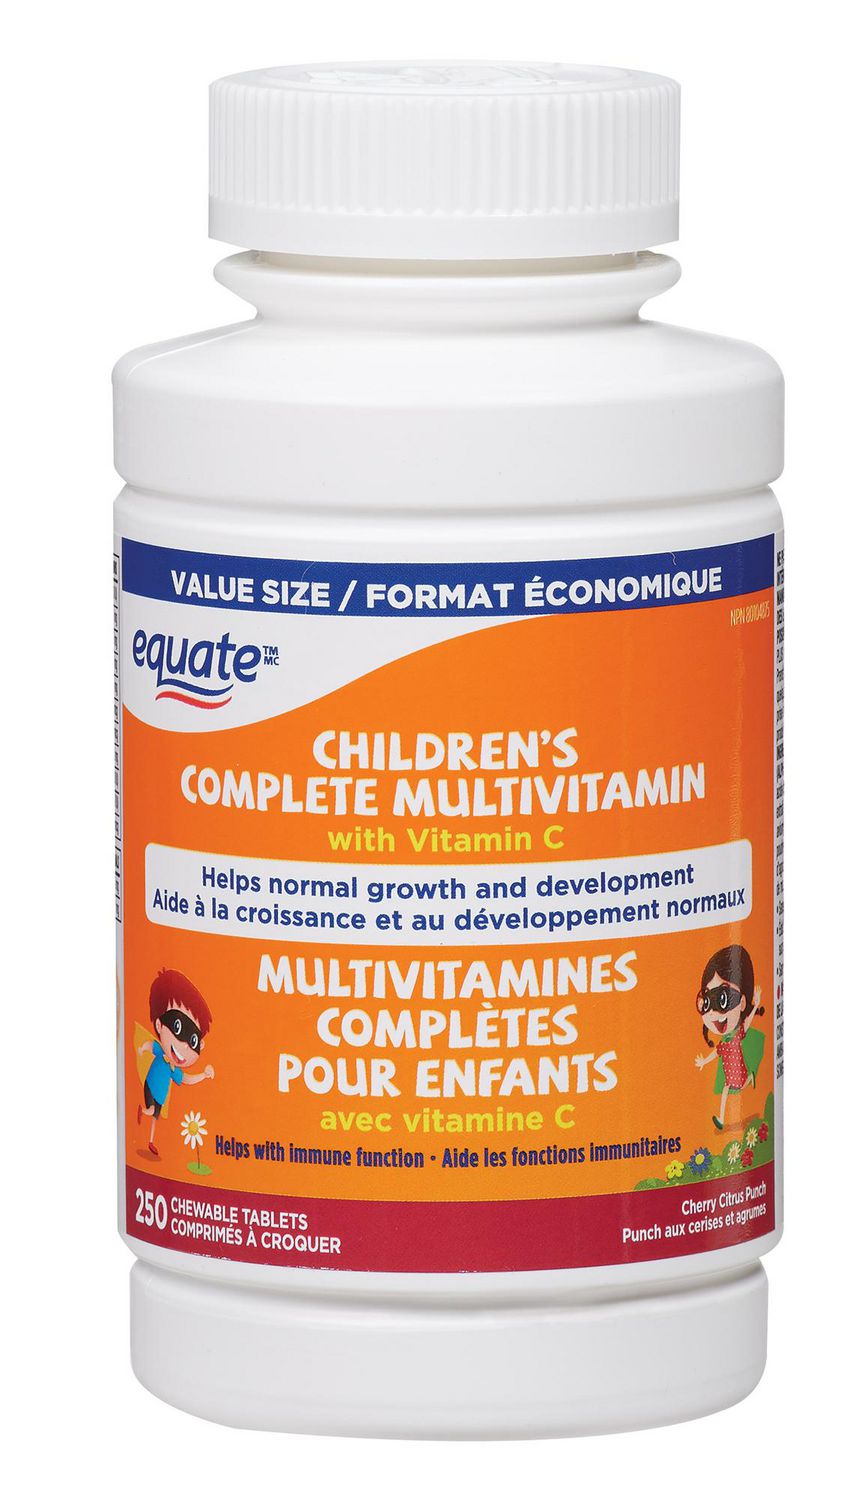 Equate Children's Complete Multivitamin with Vitamin C